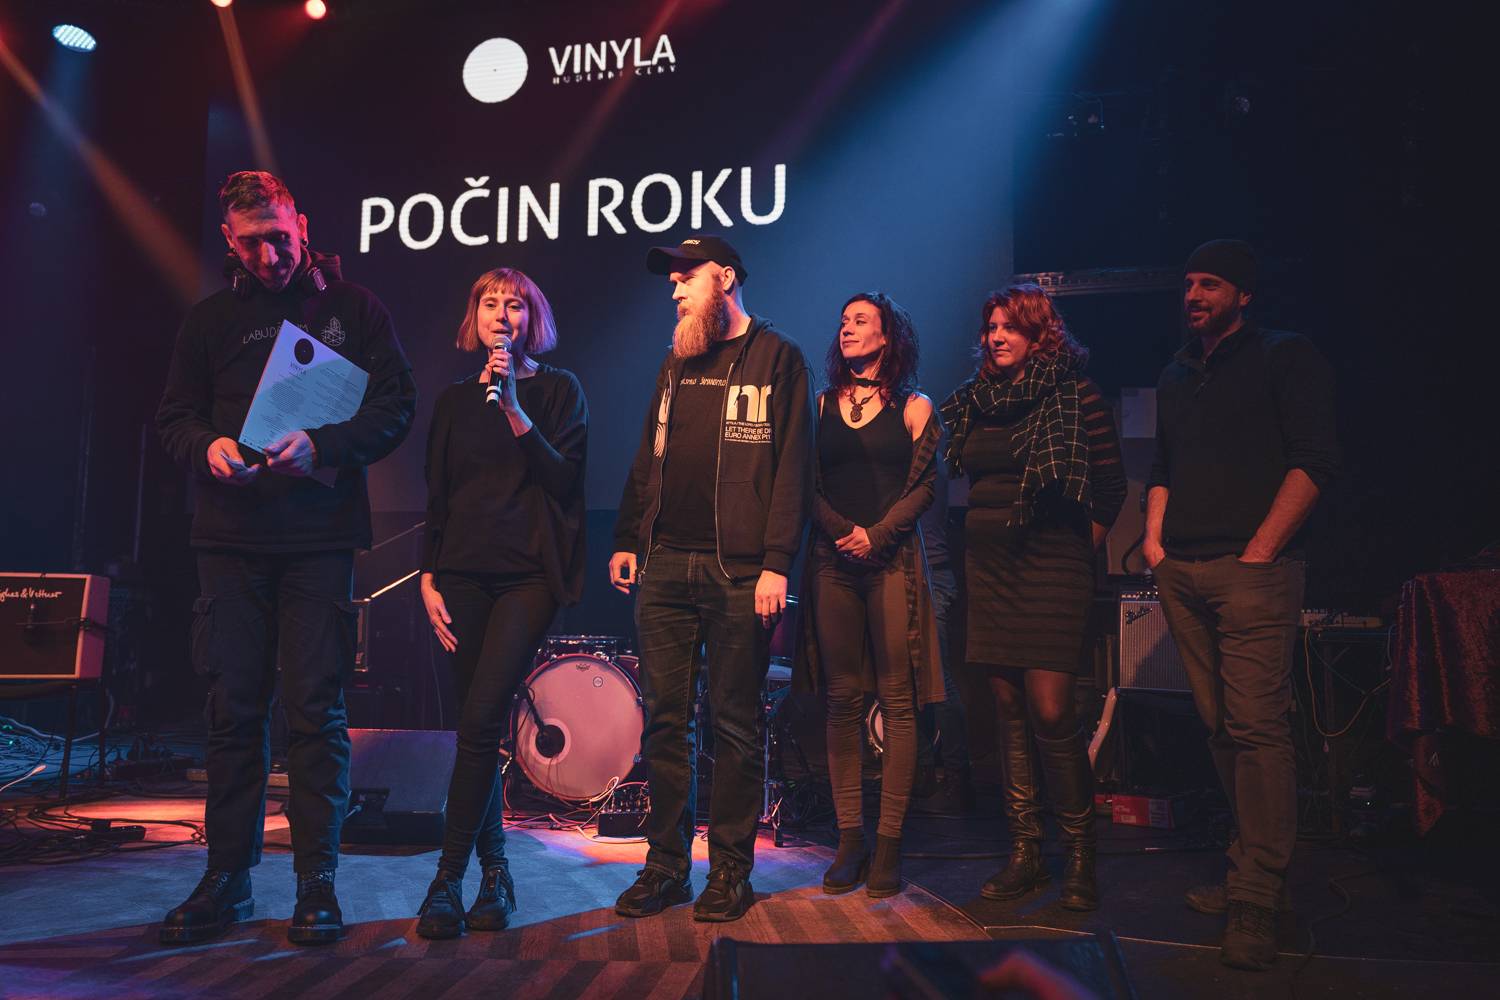 Hudební ceny Vinyla za rok 2019 vyhráli B4, Margo a klub Punctum